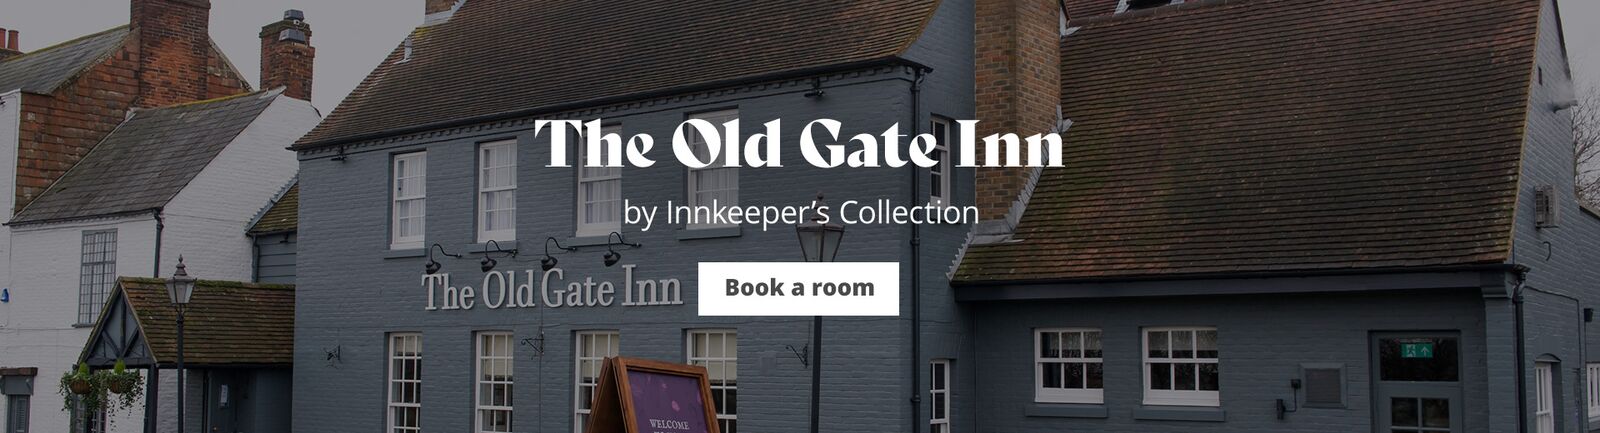 The Old Gate Inn 